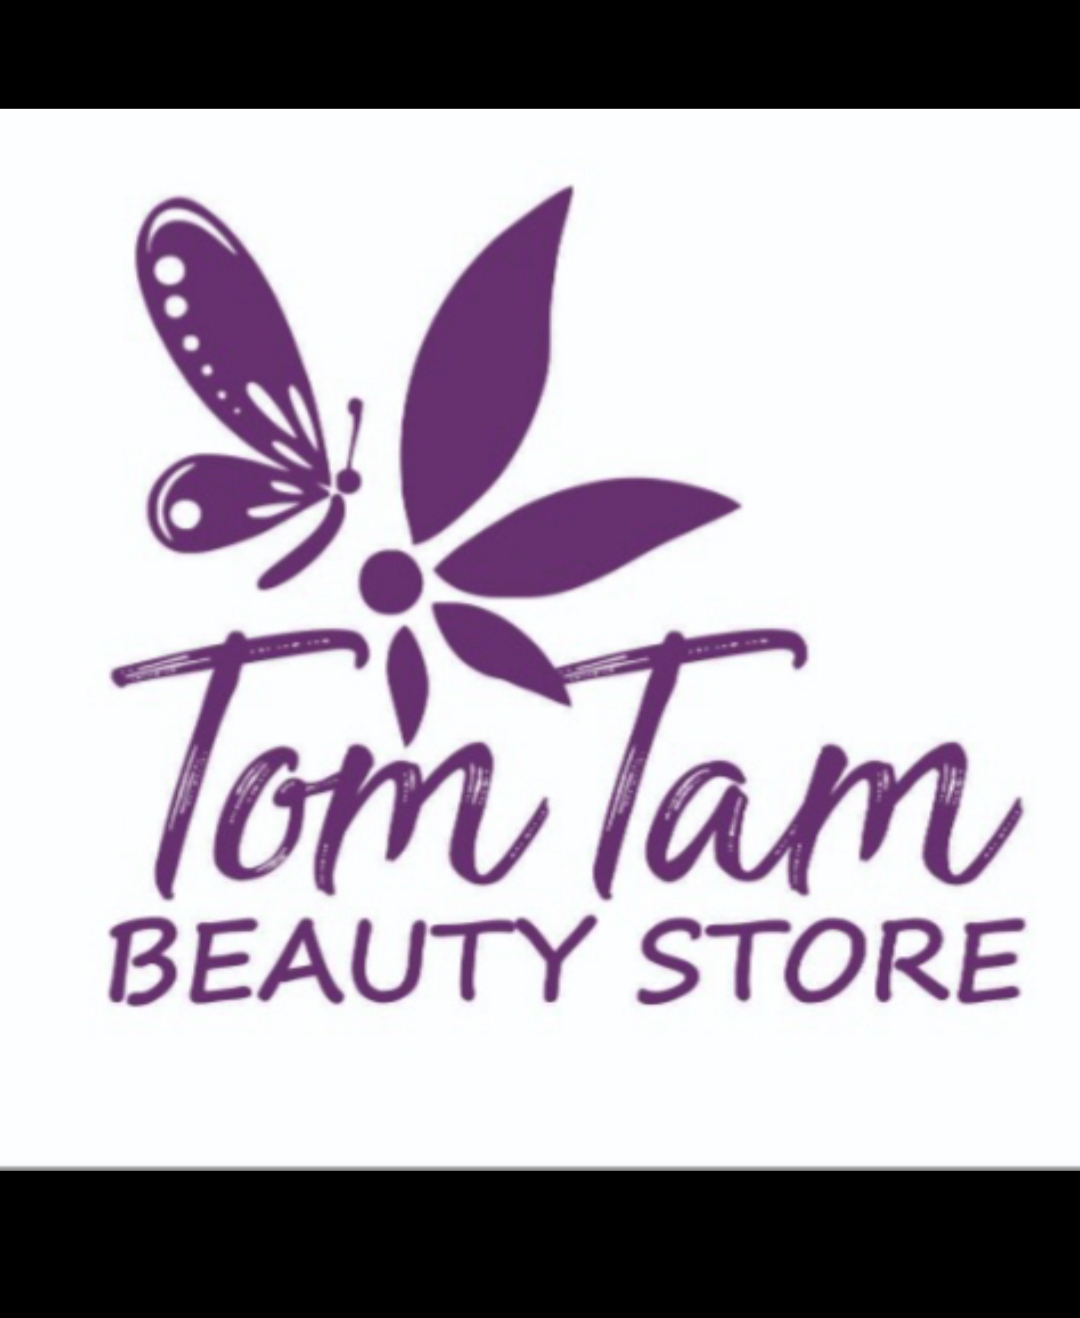 Tom Tam Beauty Store